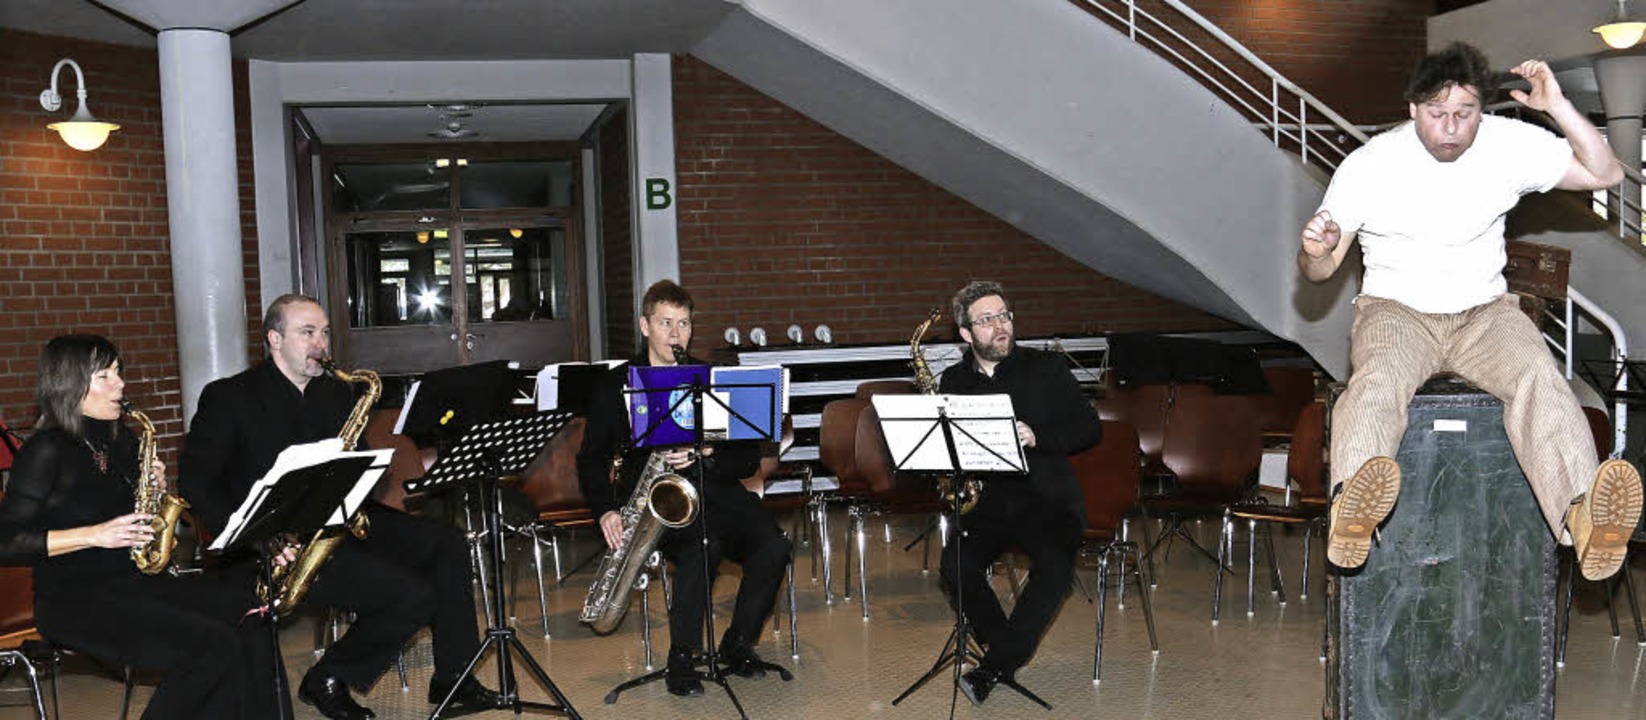 Das Raschèr Saxophon Quartett: Christi...ar, 11 Uhr, in Freiburg, Humboldtsaal)  | Foto: Dagmar Barber